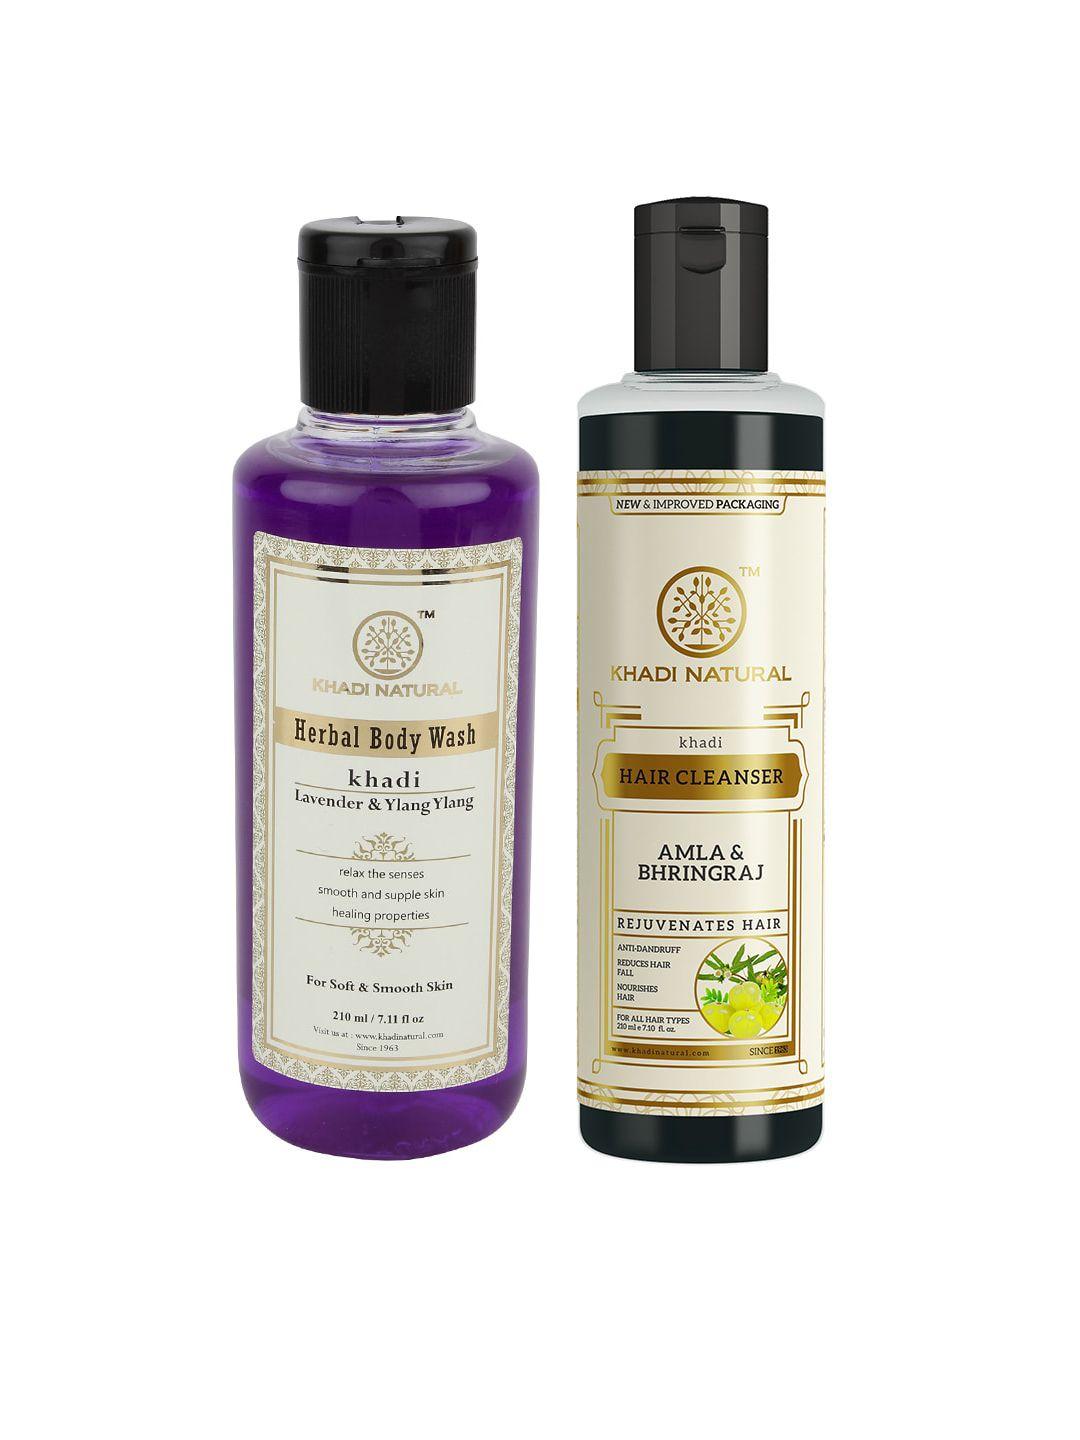 khadi-natural-set-of-amla-&-bhringraj-hair-cleanser--lavender-herbal-body-wash